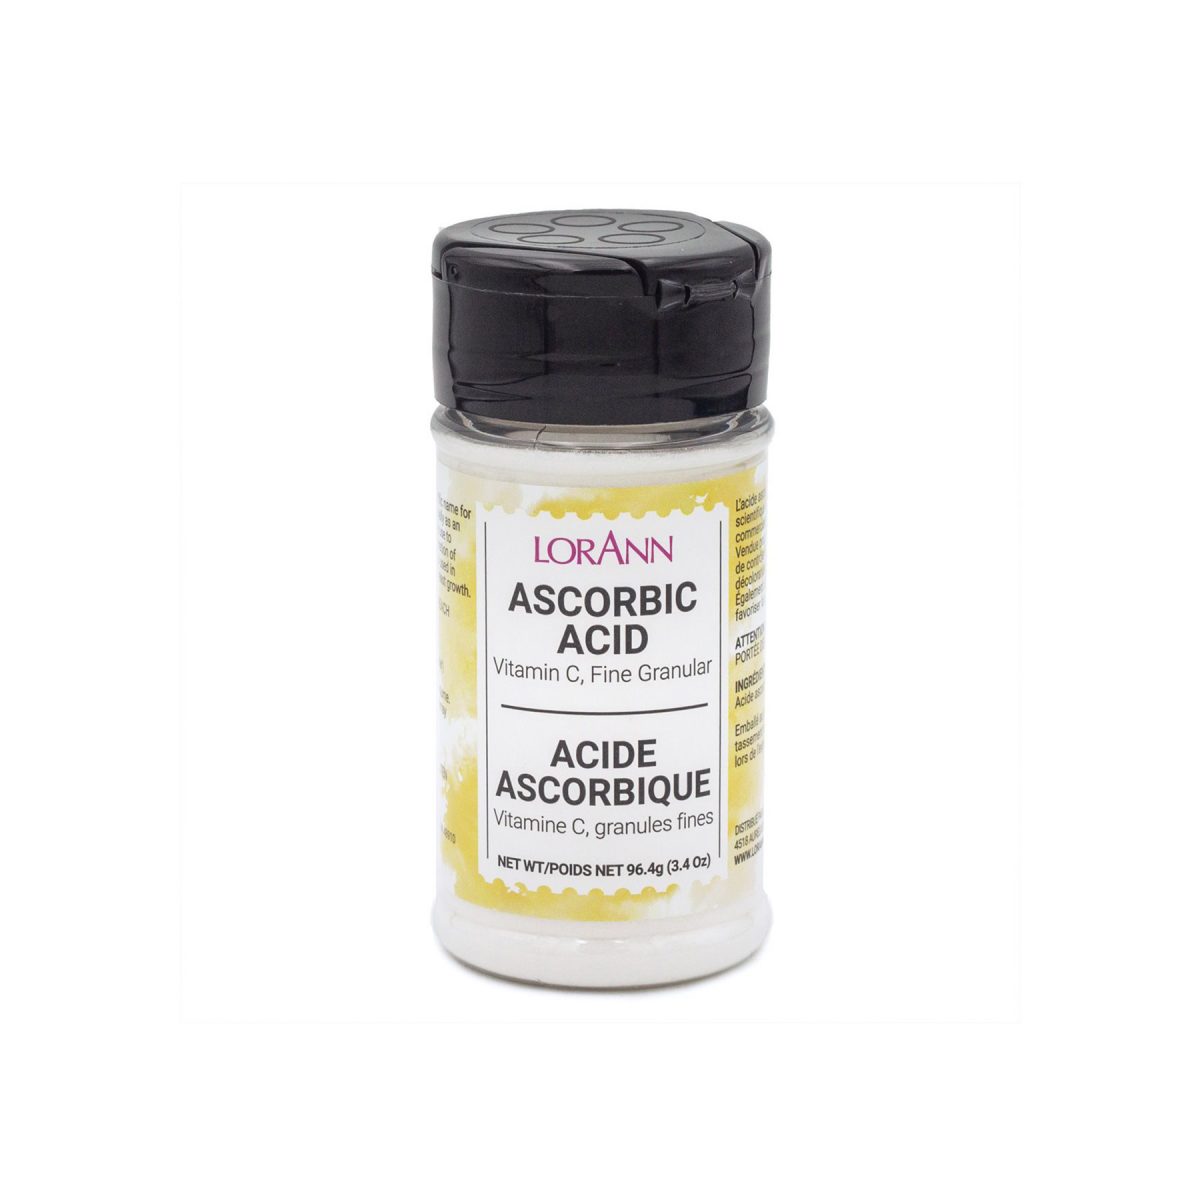 lorann-ascorbic-acid-96.4g